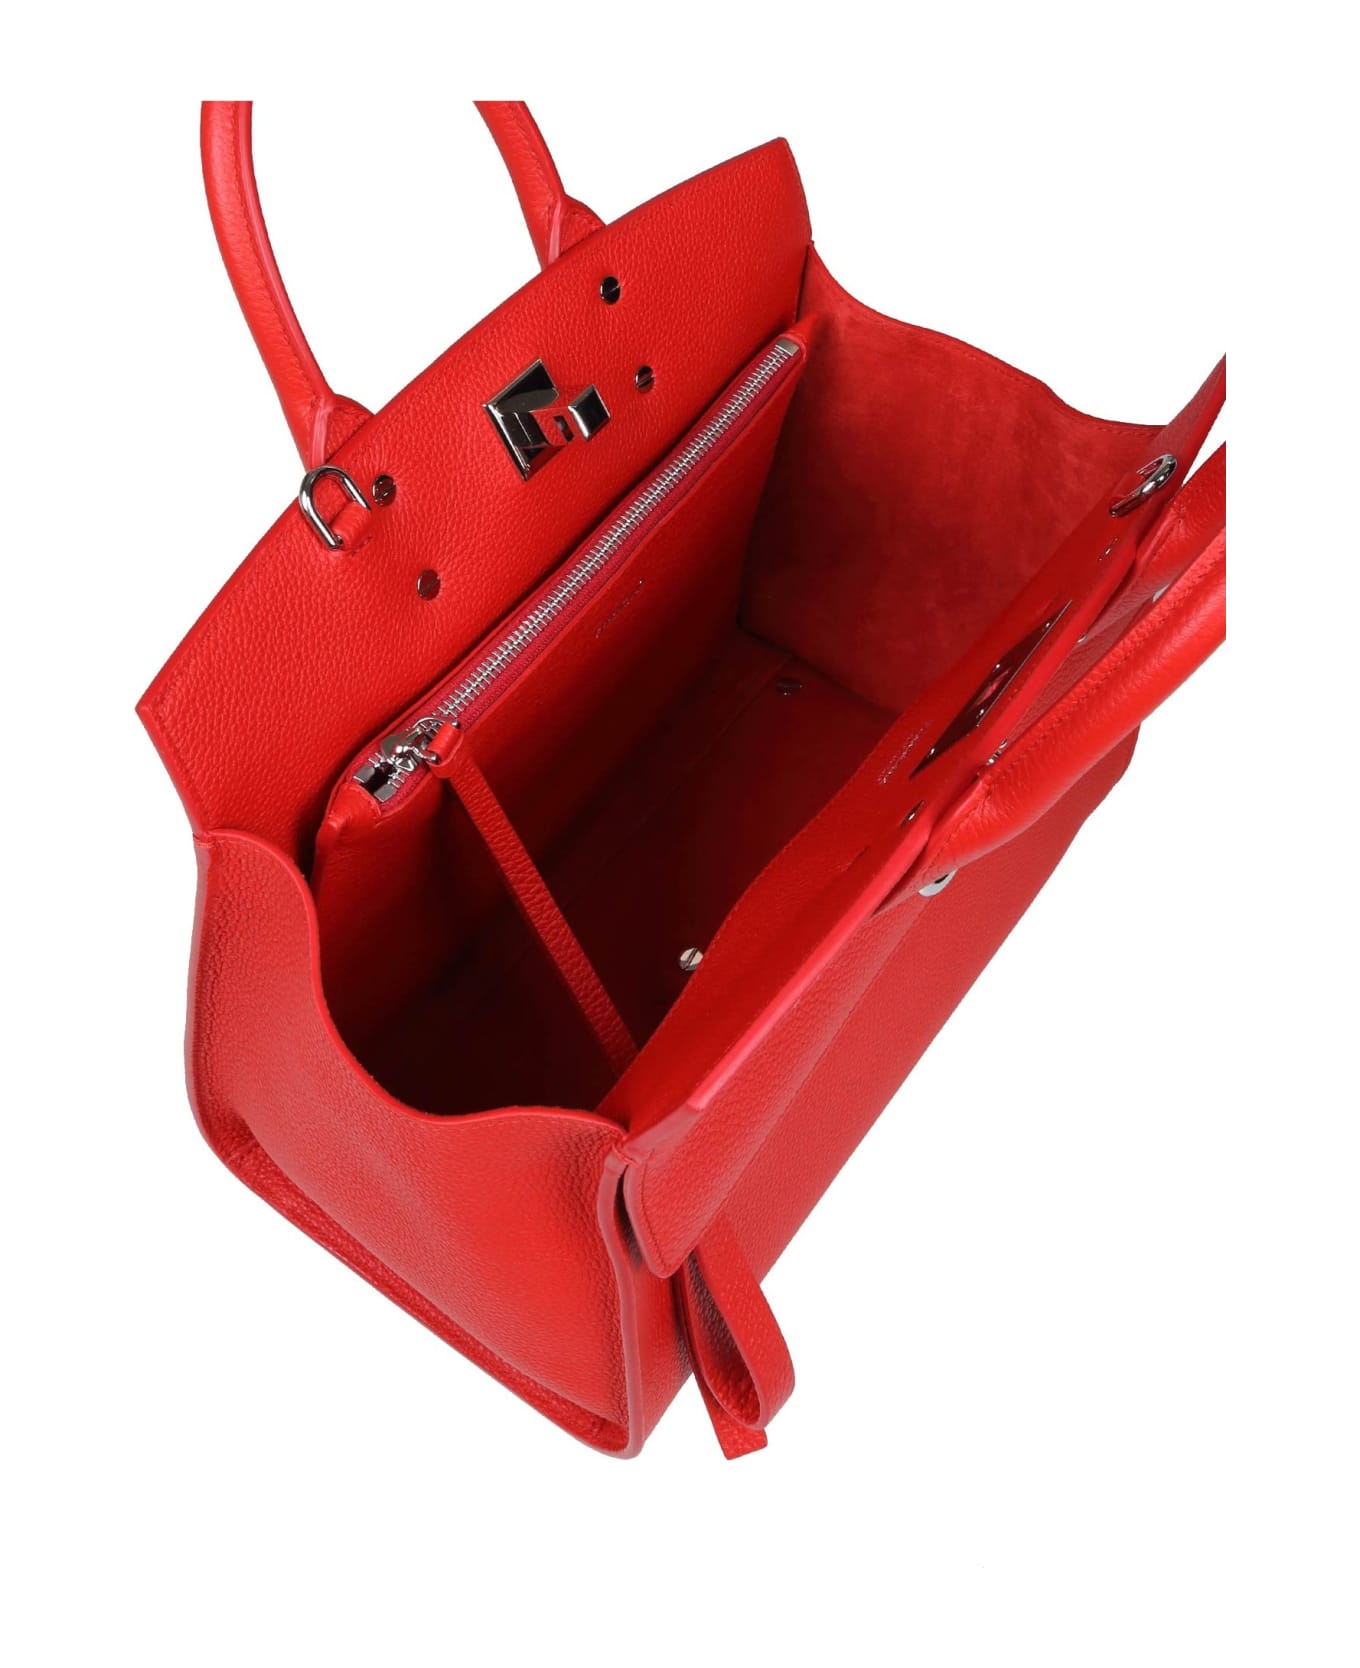 Ferragamo Studio Sof Leather Handbag - Flame Red  トートバッグ